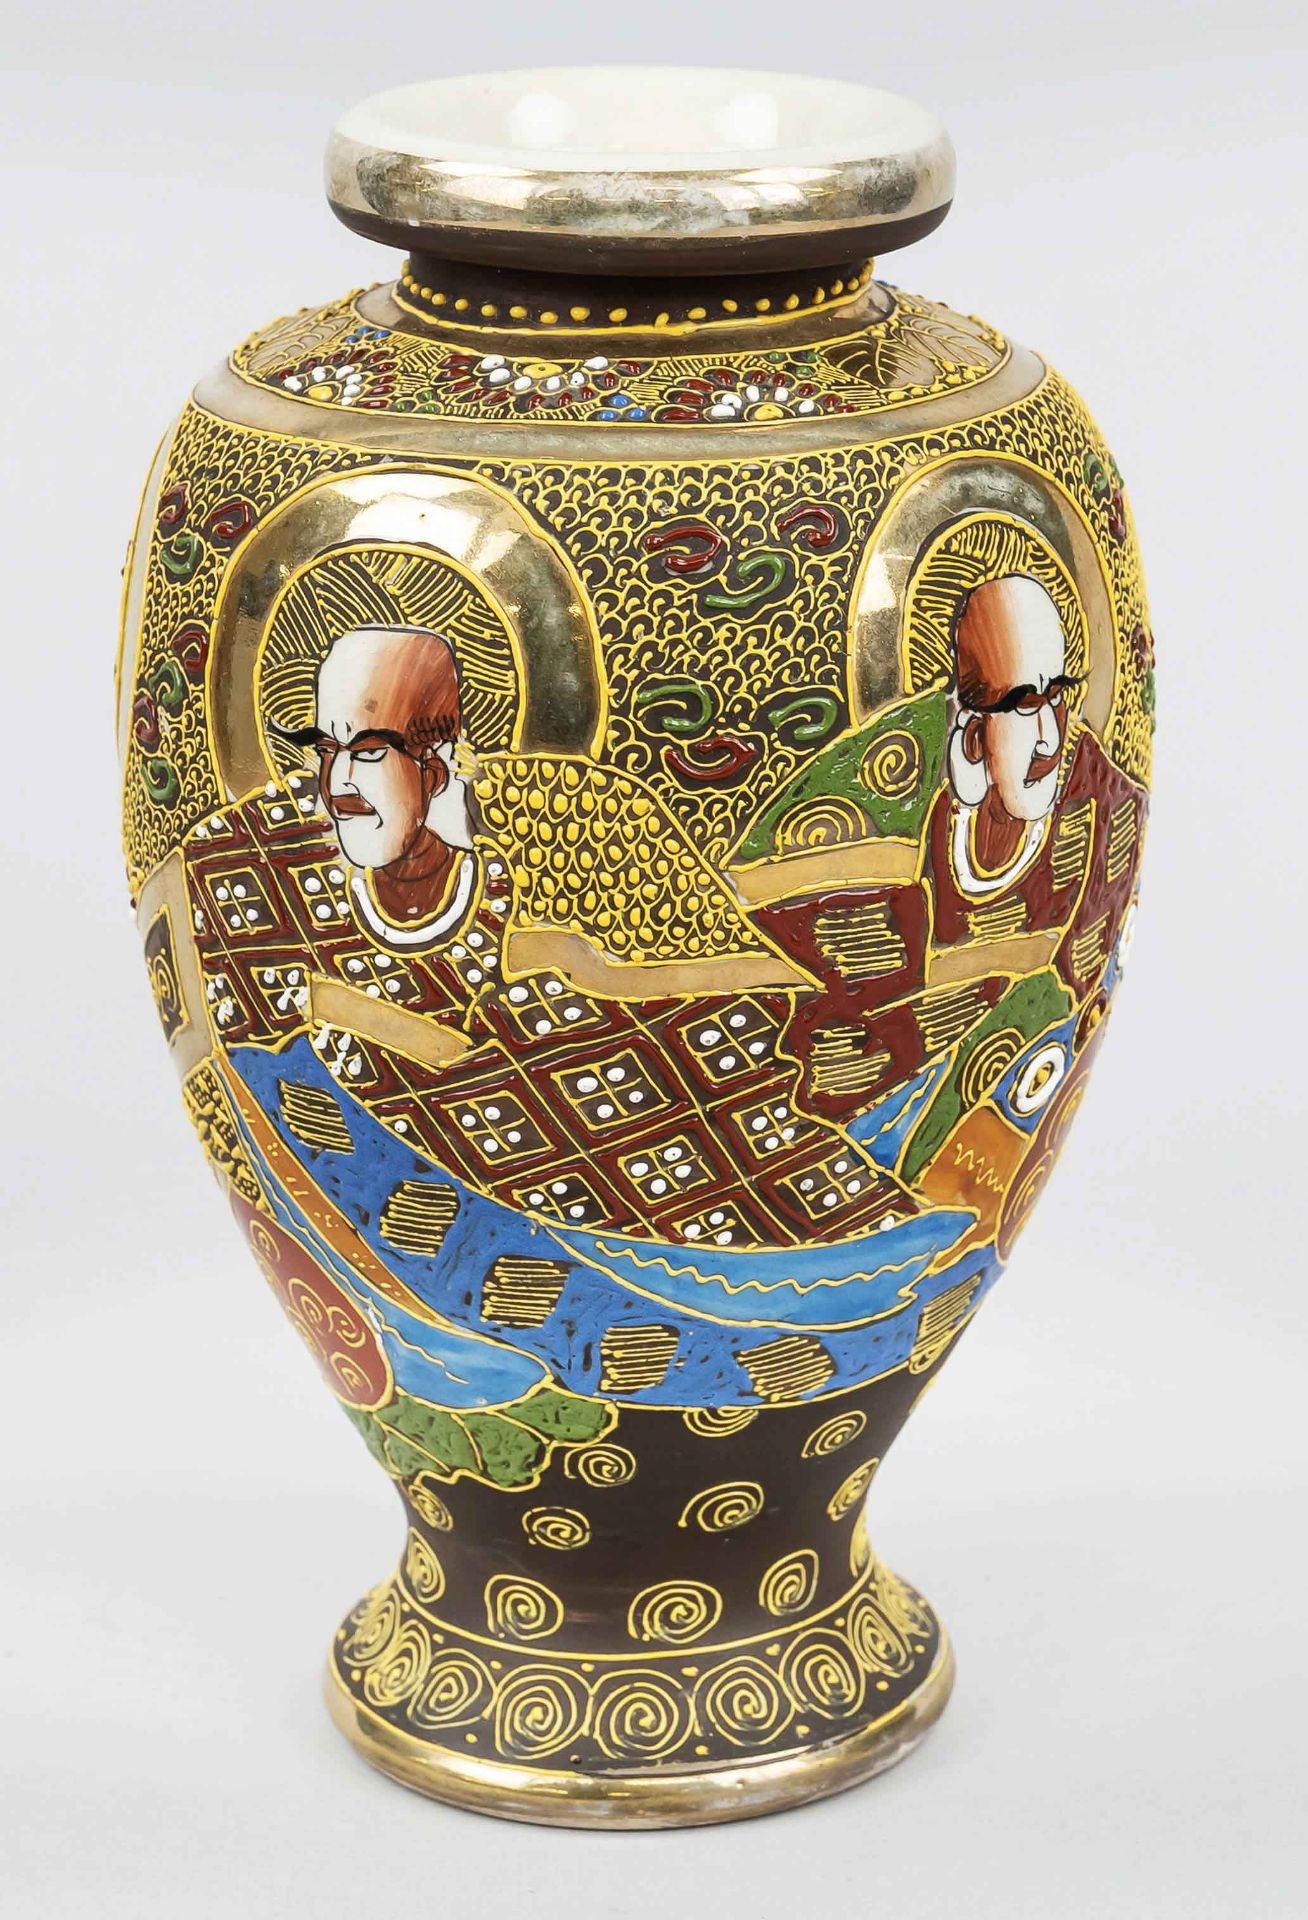 Satsuma vase with expressionistic decoration, Japan, 1920s, ivory porcelain with fine craquelé, rich - Image 3 of 4